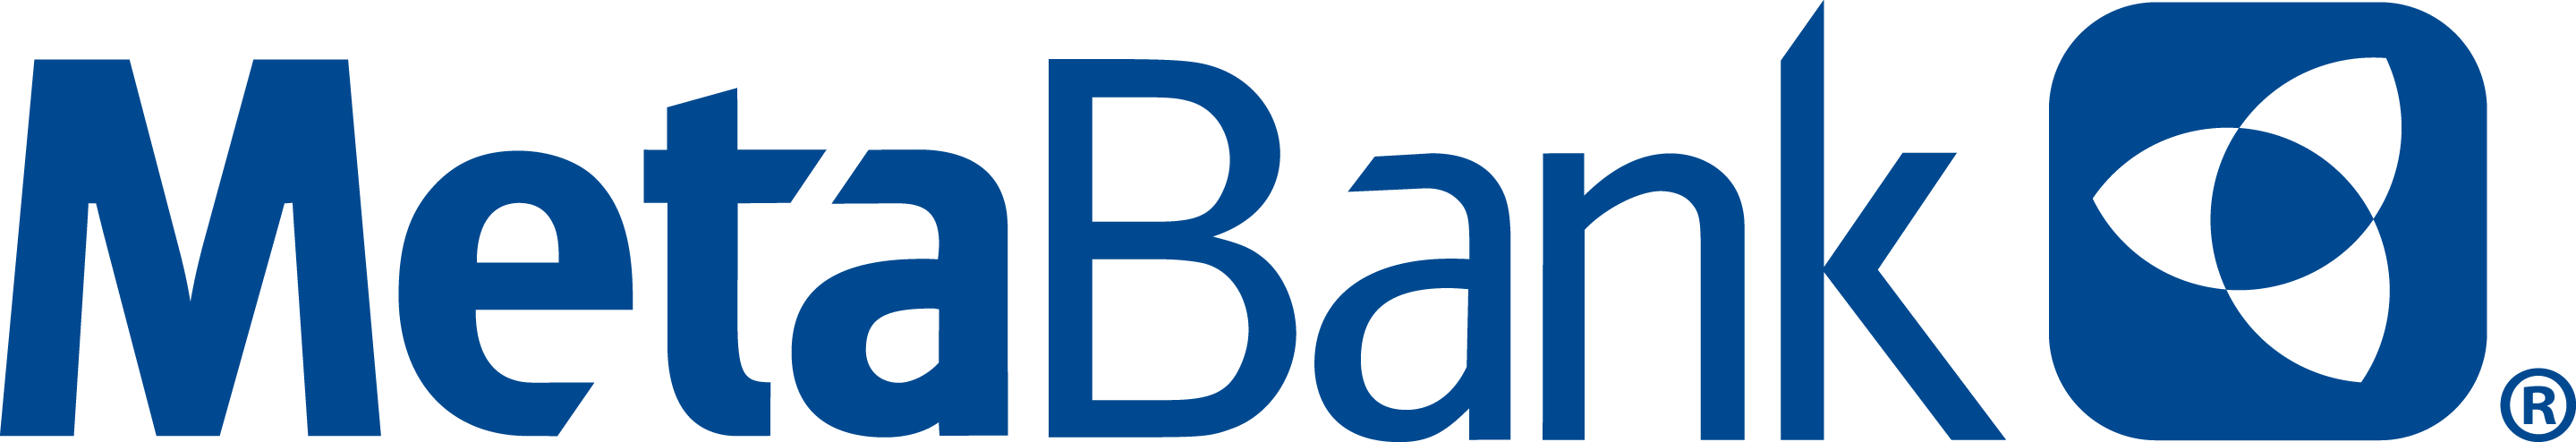 MetaBank Logo